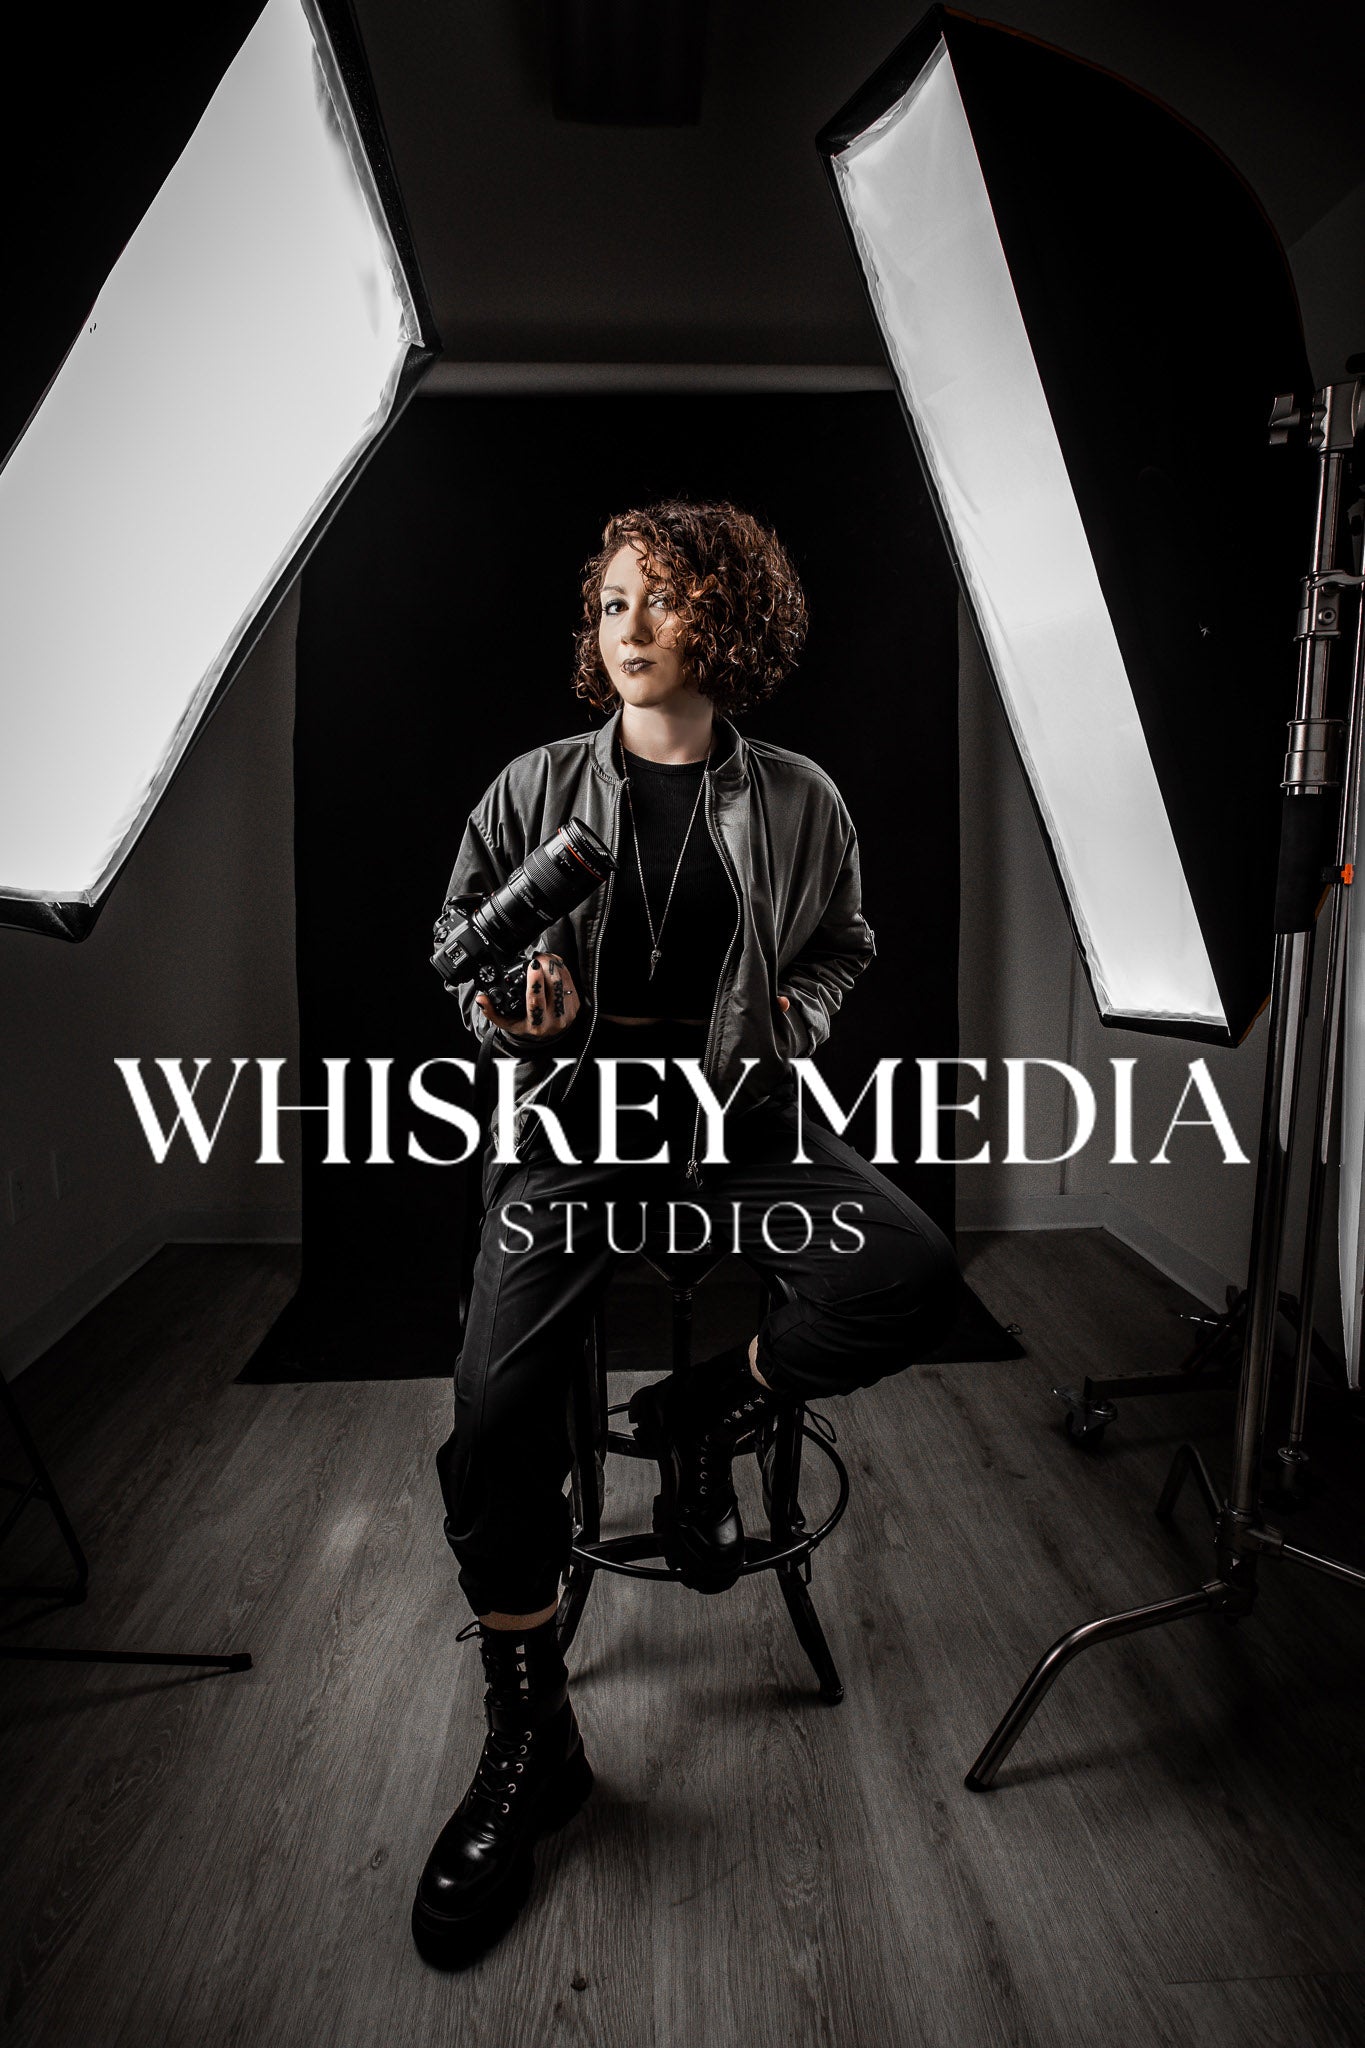 Andi Whiskey, Founder of Whiskey Media Studios, Long Beach, CA